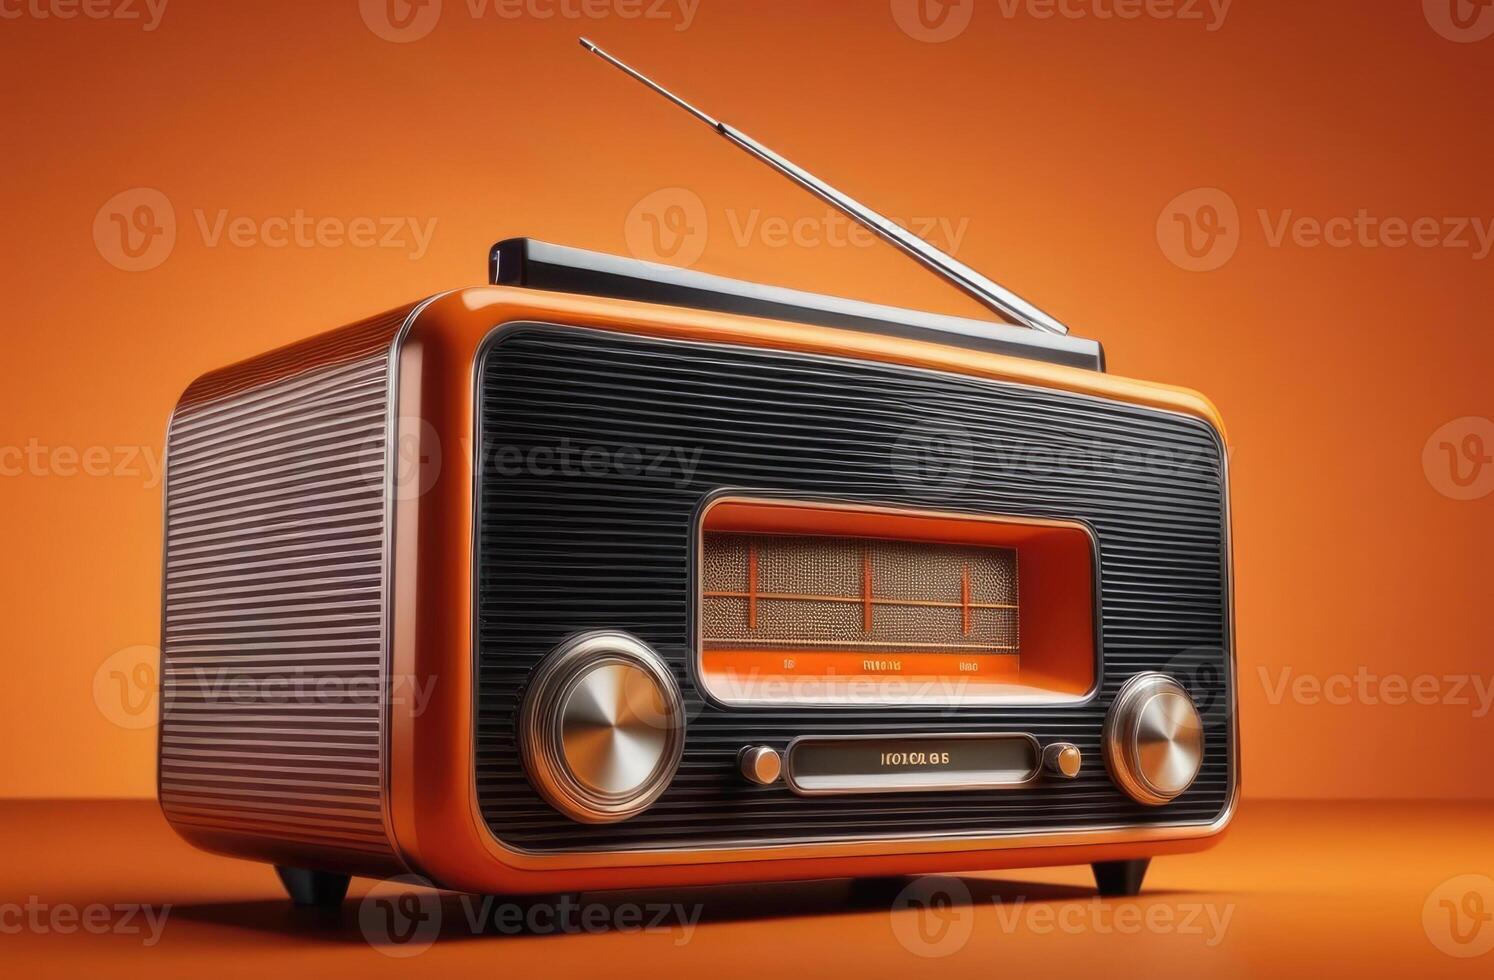 ai generiert Welt Amateur Radio Tag, International Medien Tag, alt Radio, retro Radio, Orange Hintergrund foto